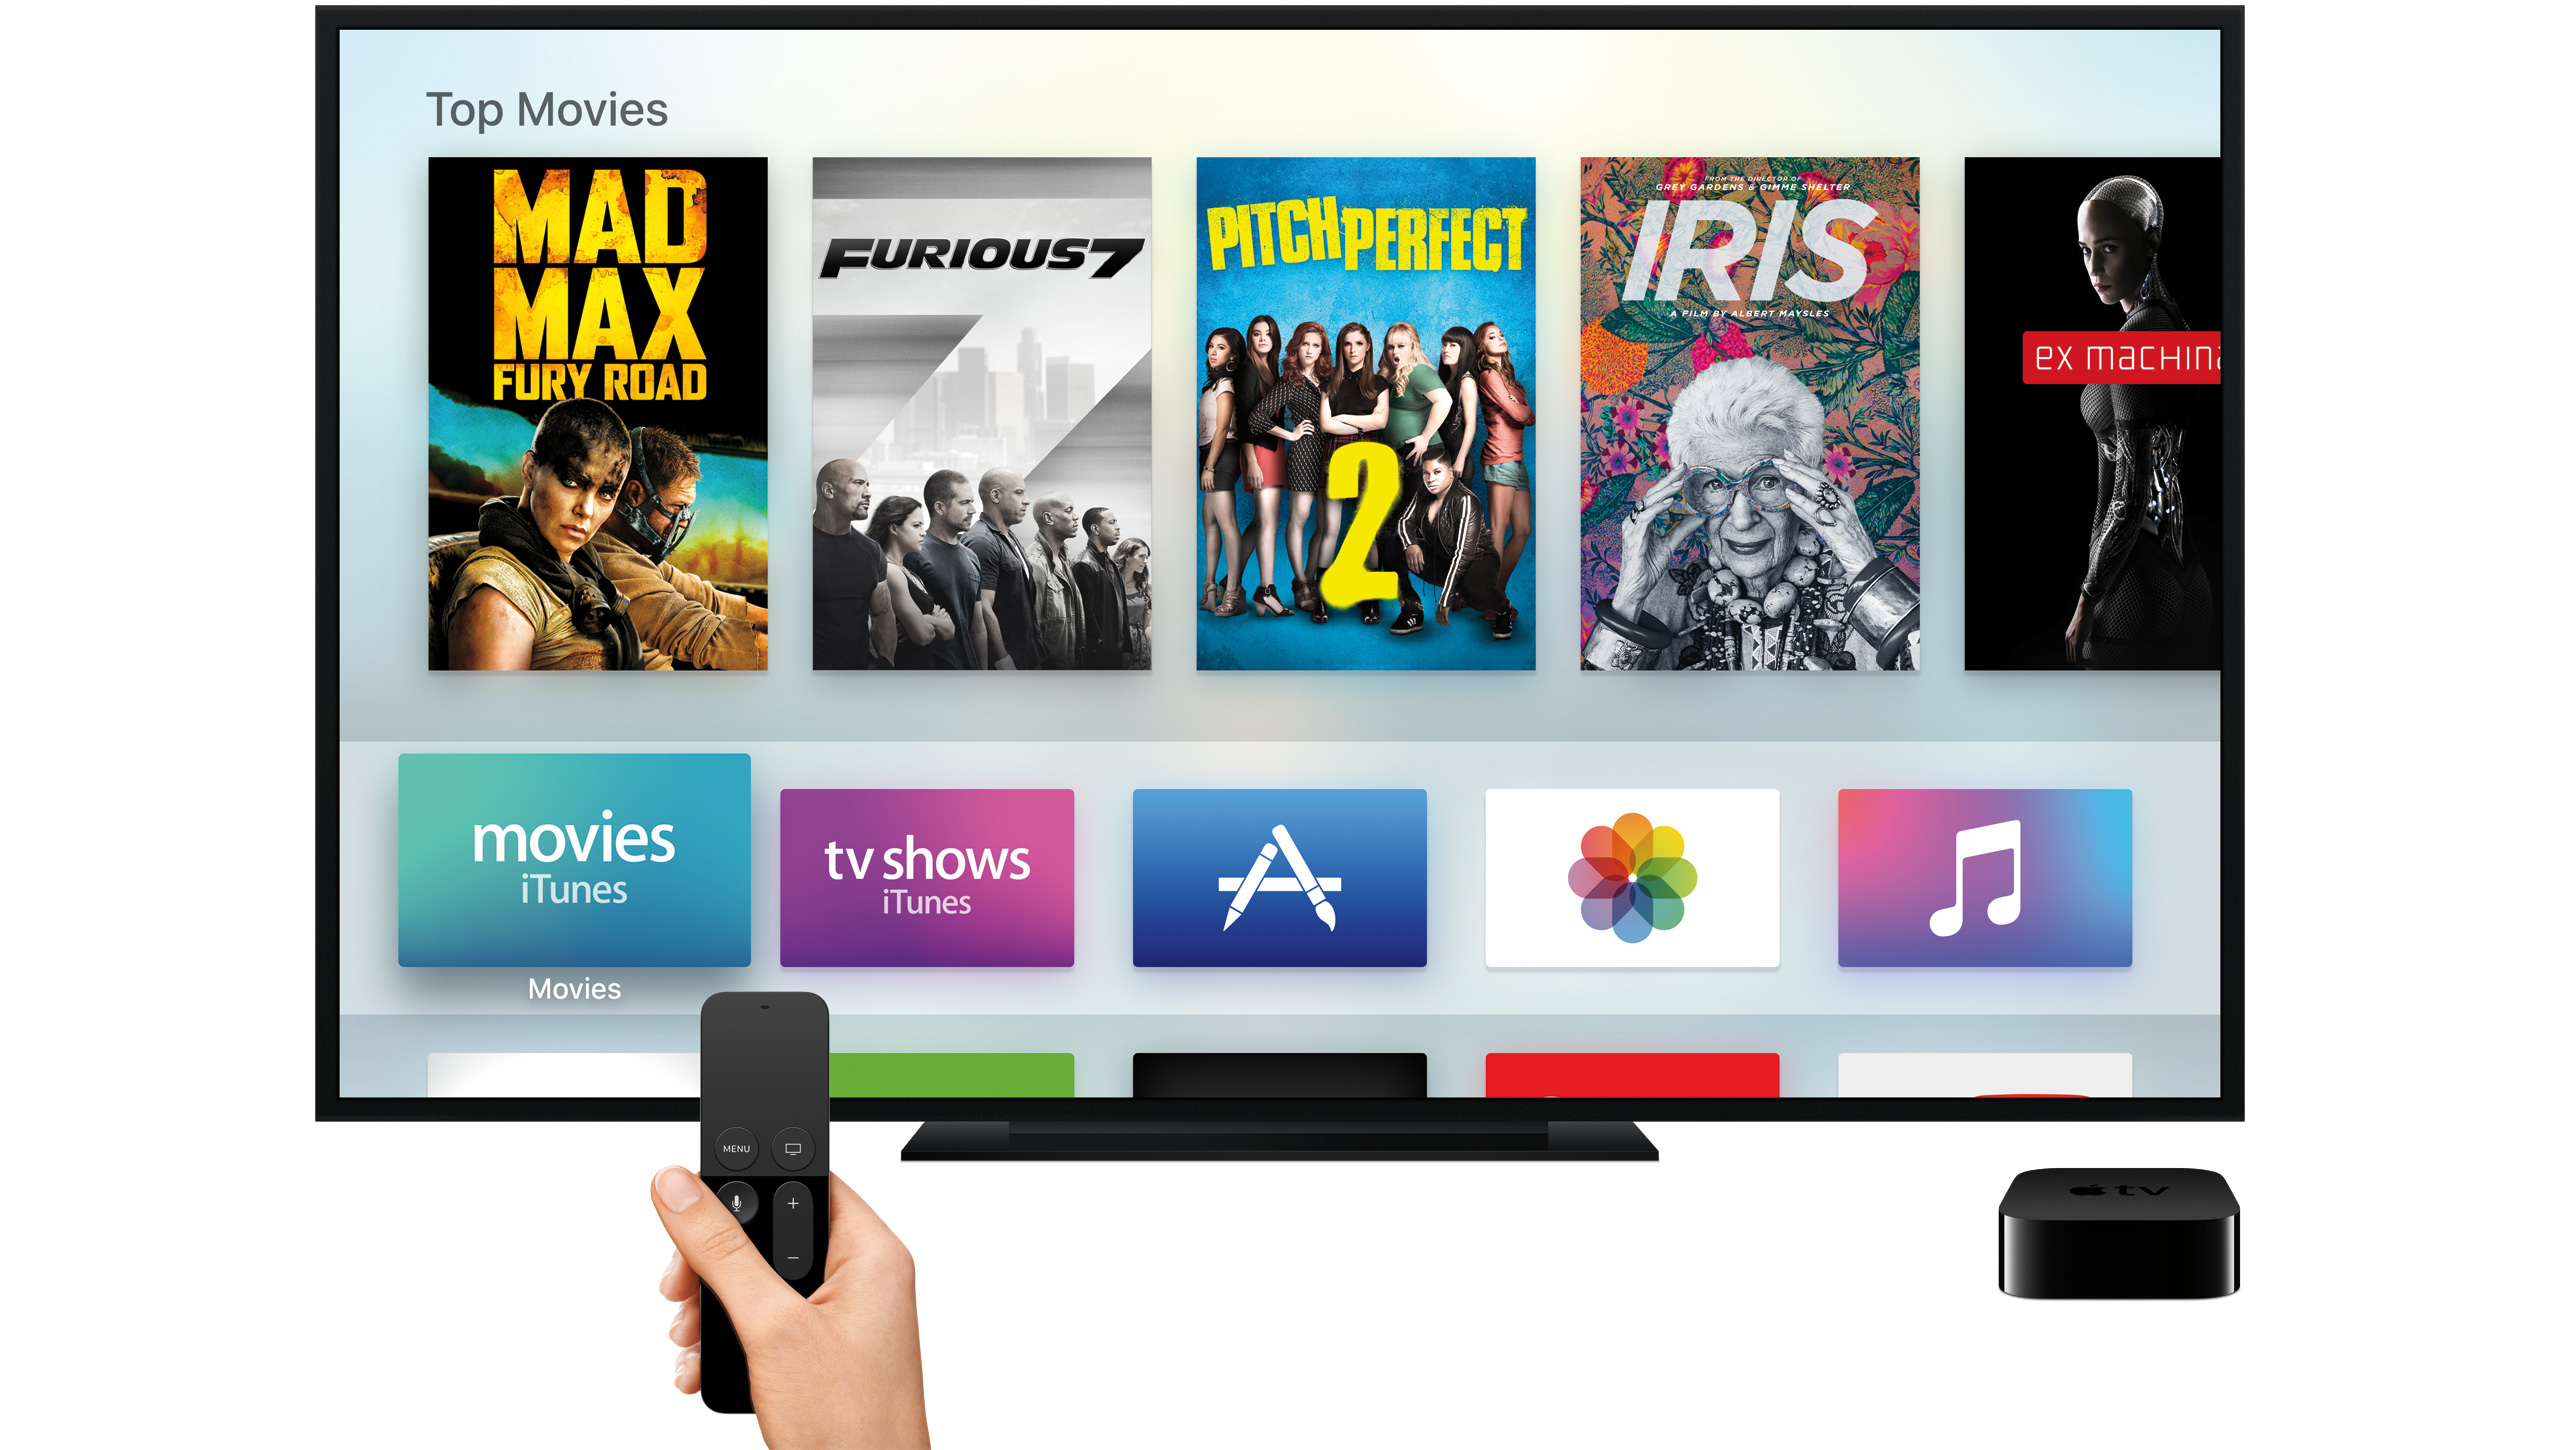 Apple Unveils New Apple TV Featuring App Store, Siri Remote, tvOS, More